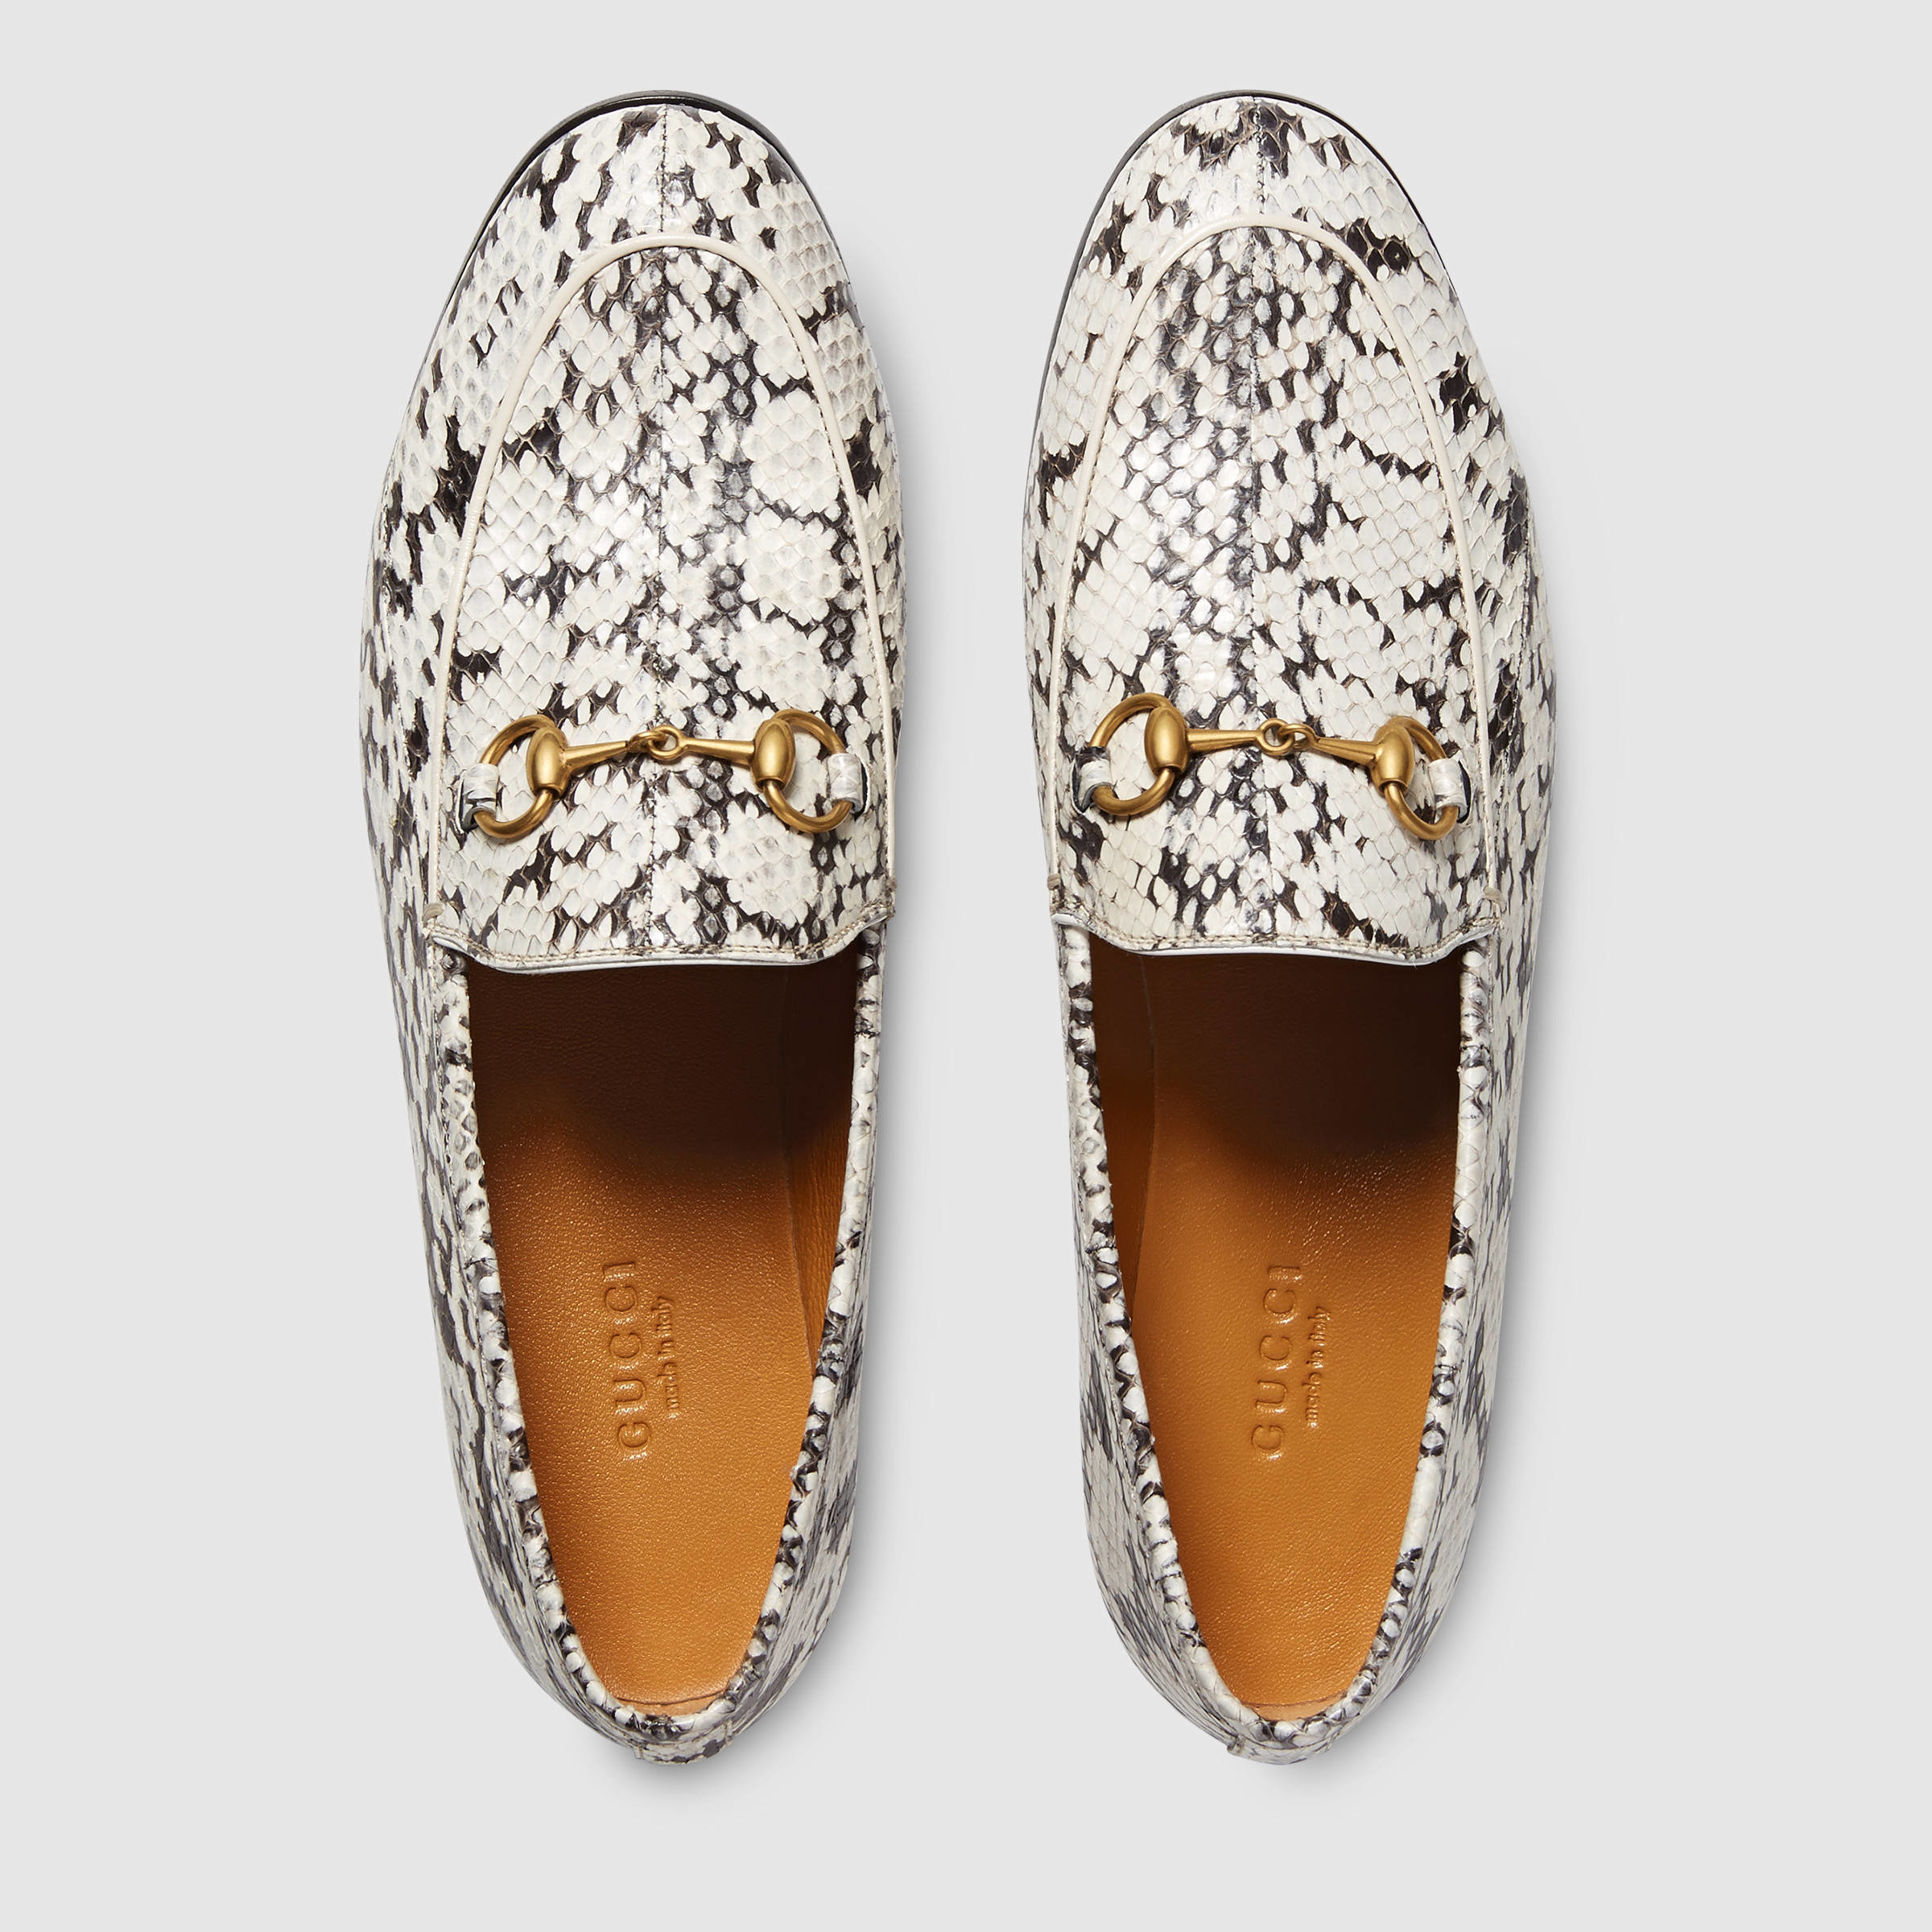 Lyst - Gucci Jordaan Snakeskin Loafers in Gray